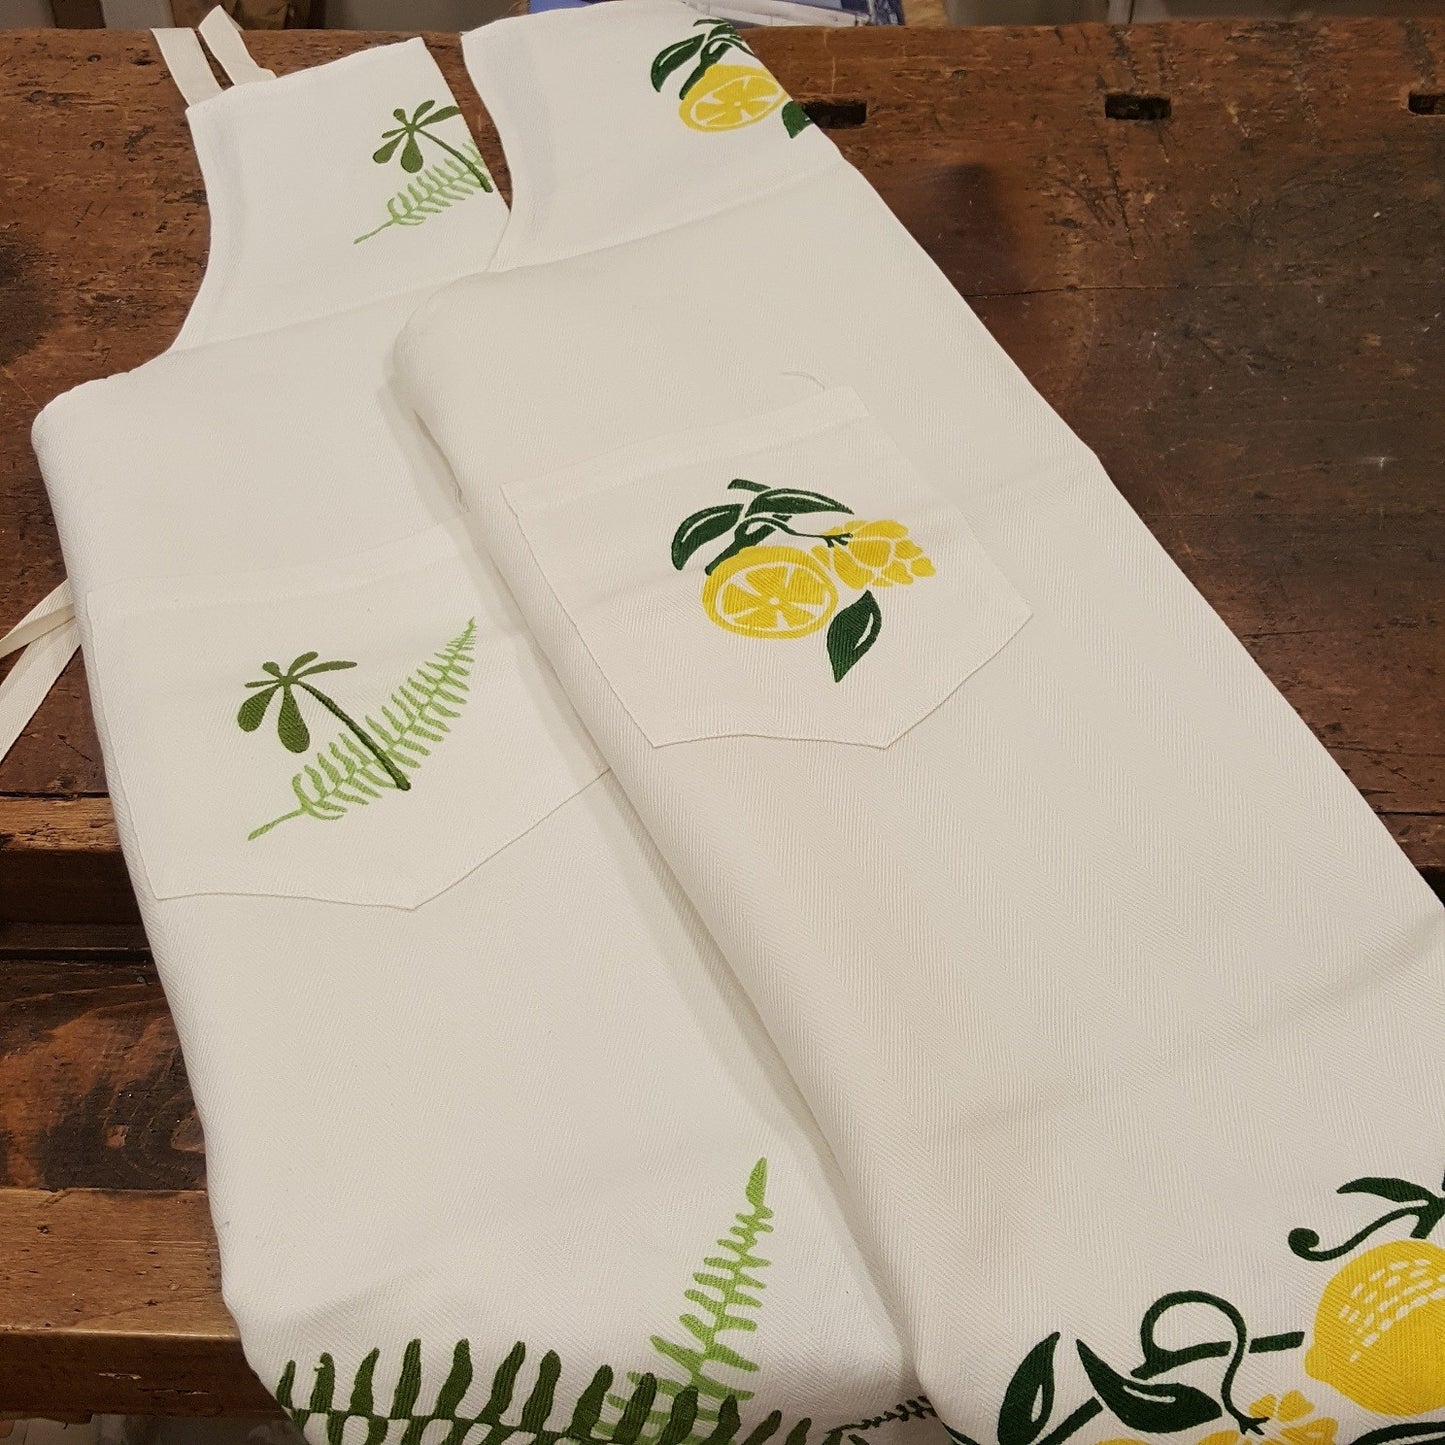 Hand printed apron decorating strawberries, cherries, lemons or fern